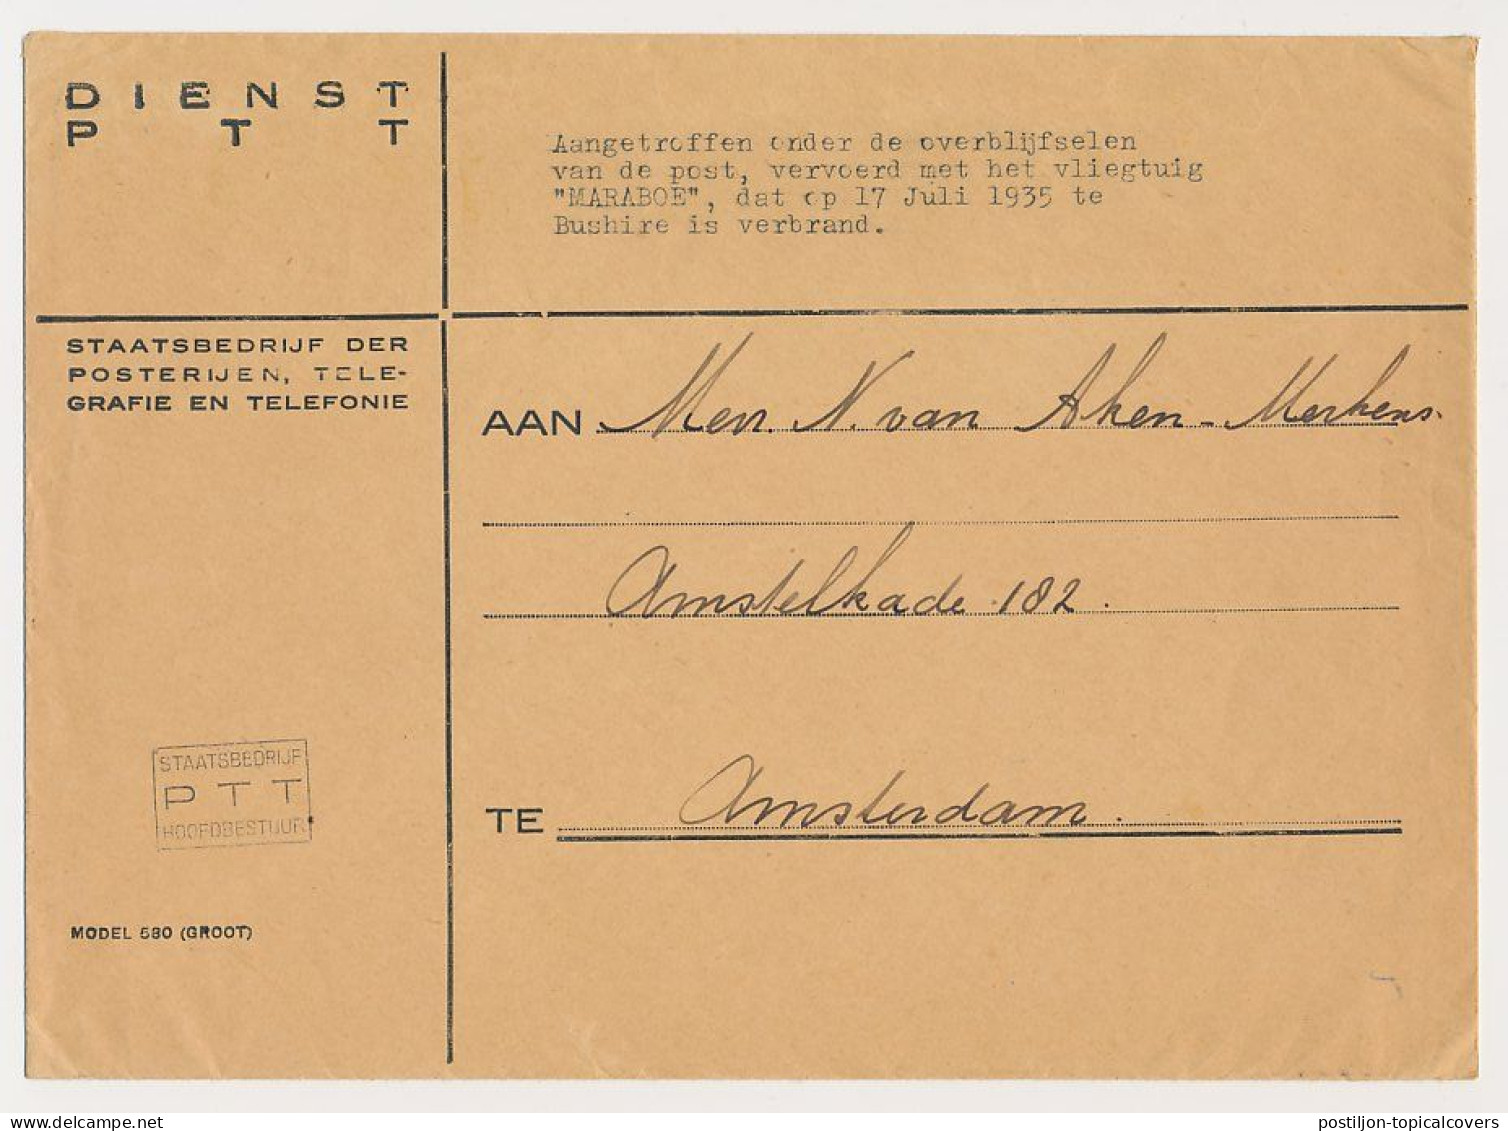 Crash Mail Cover Netherlands Indies - Amsterdam 1935 - Nierinck 350717 - Bushire Iran - Maraboe - Poste Aérienne